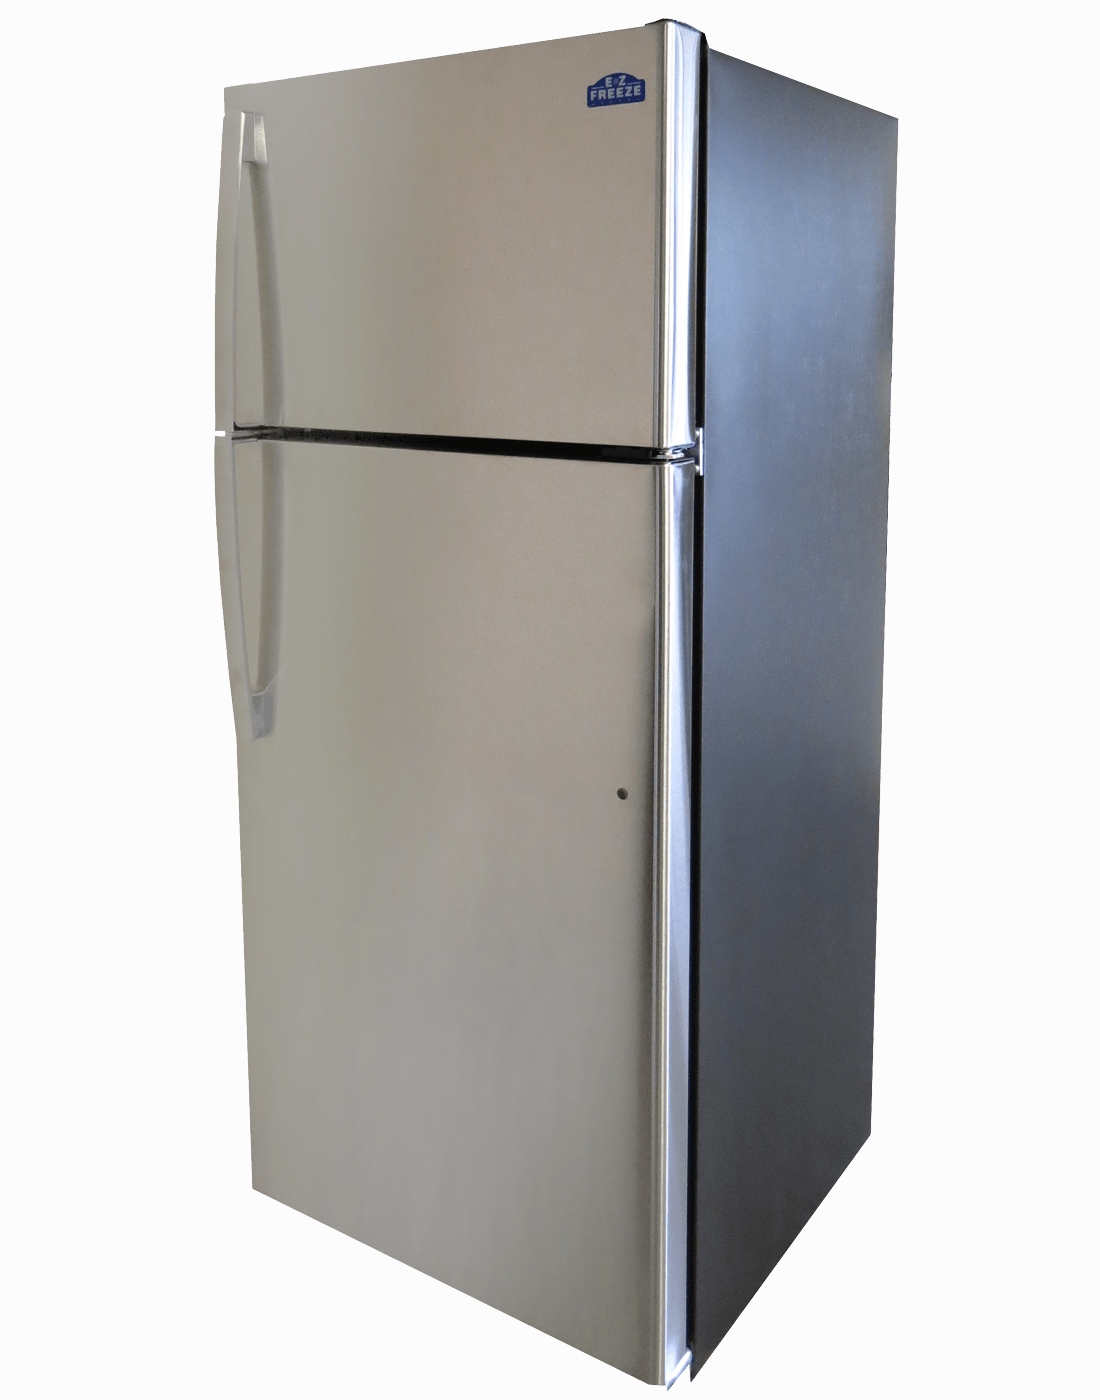 EZ Freeze Natural Gas Refrigerator EZ Freeze EZ-19SNG Natural Gas Refrigerator-Freezer in Stainless Steel 19 cu. ft.